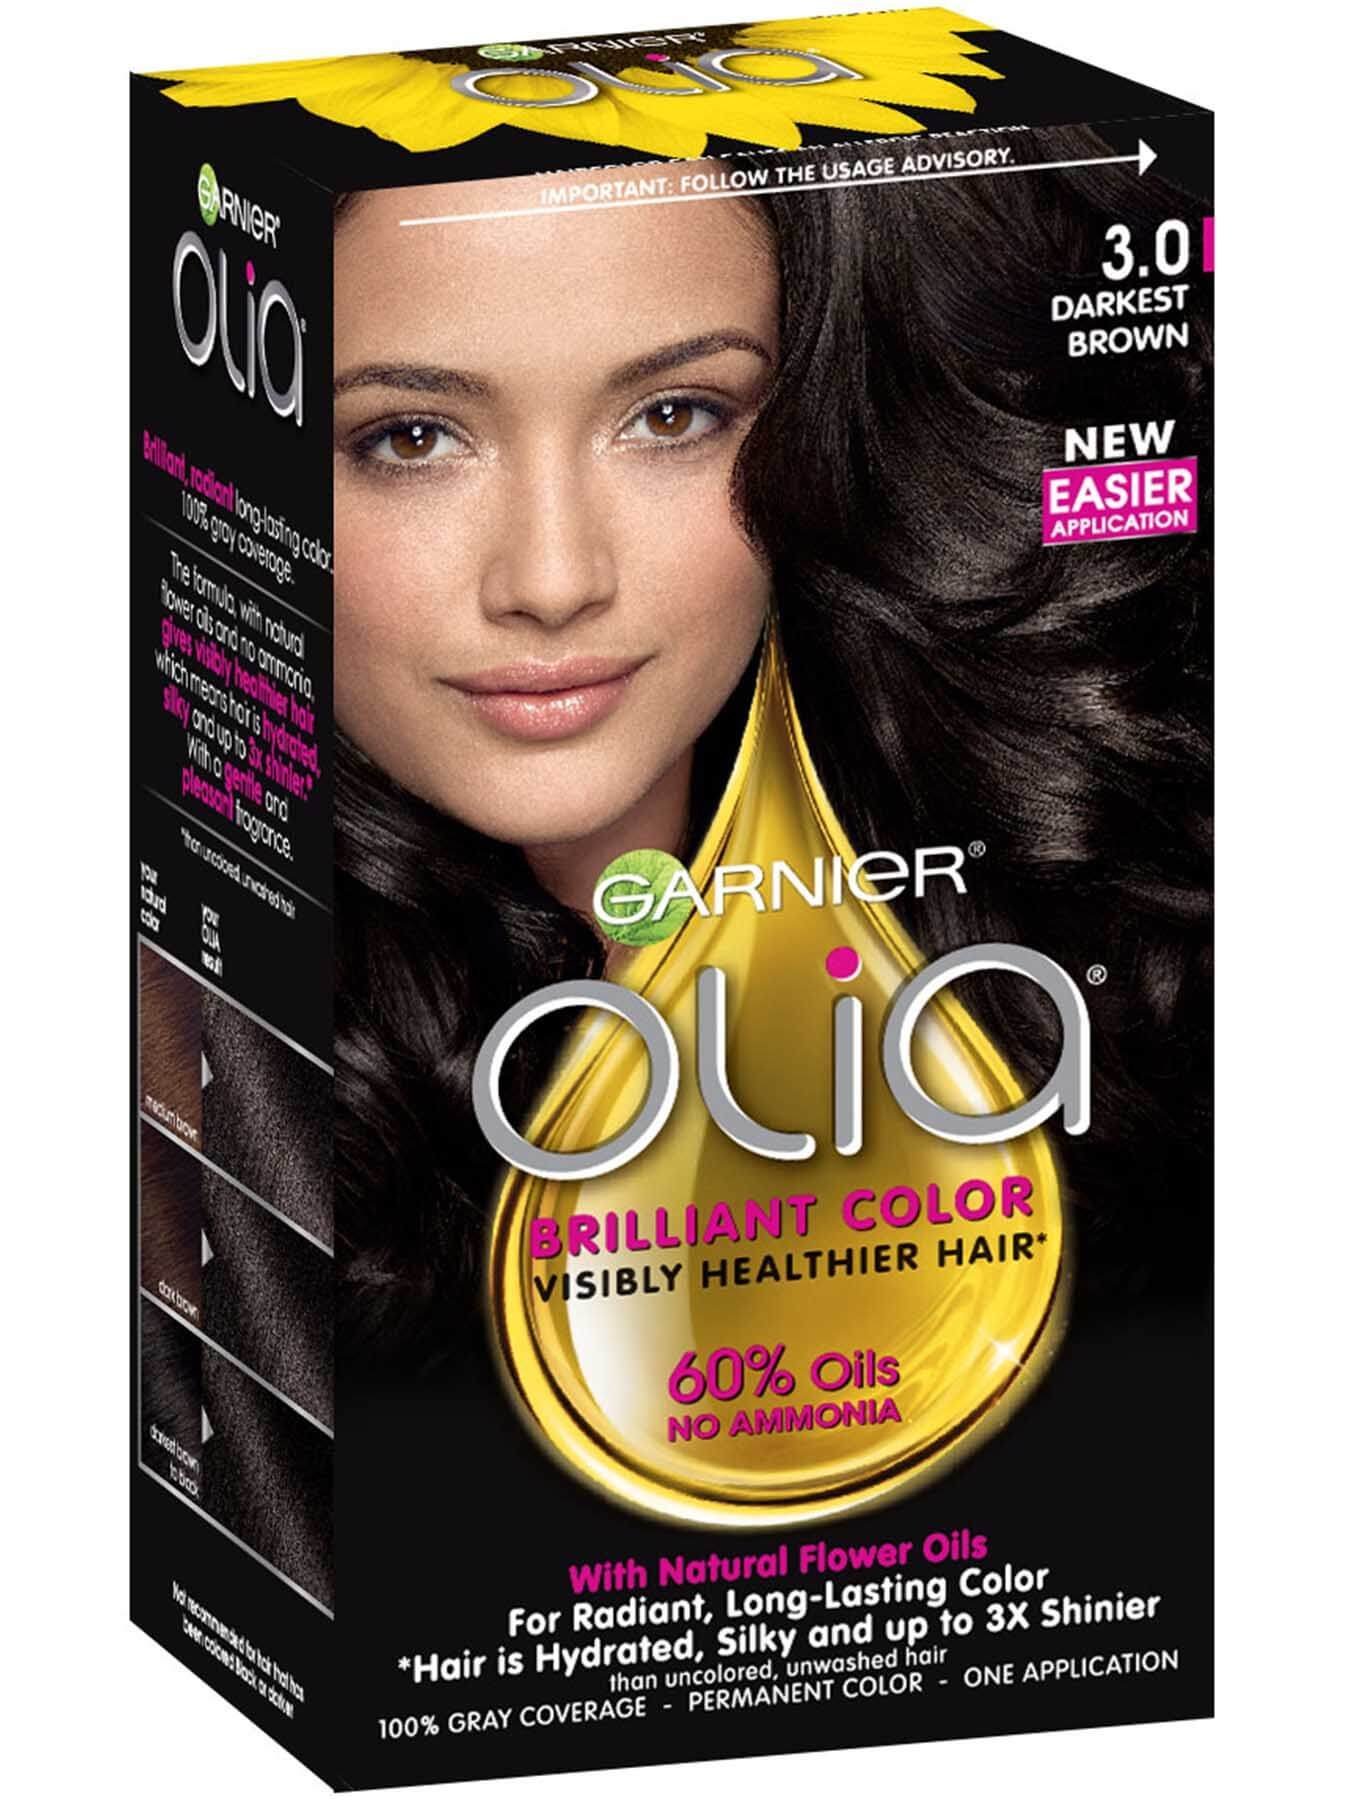 Olia AmmoniaFree Permanent Hair Color Darkest Brown